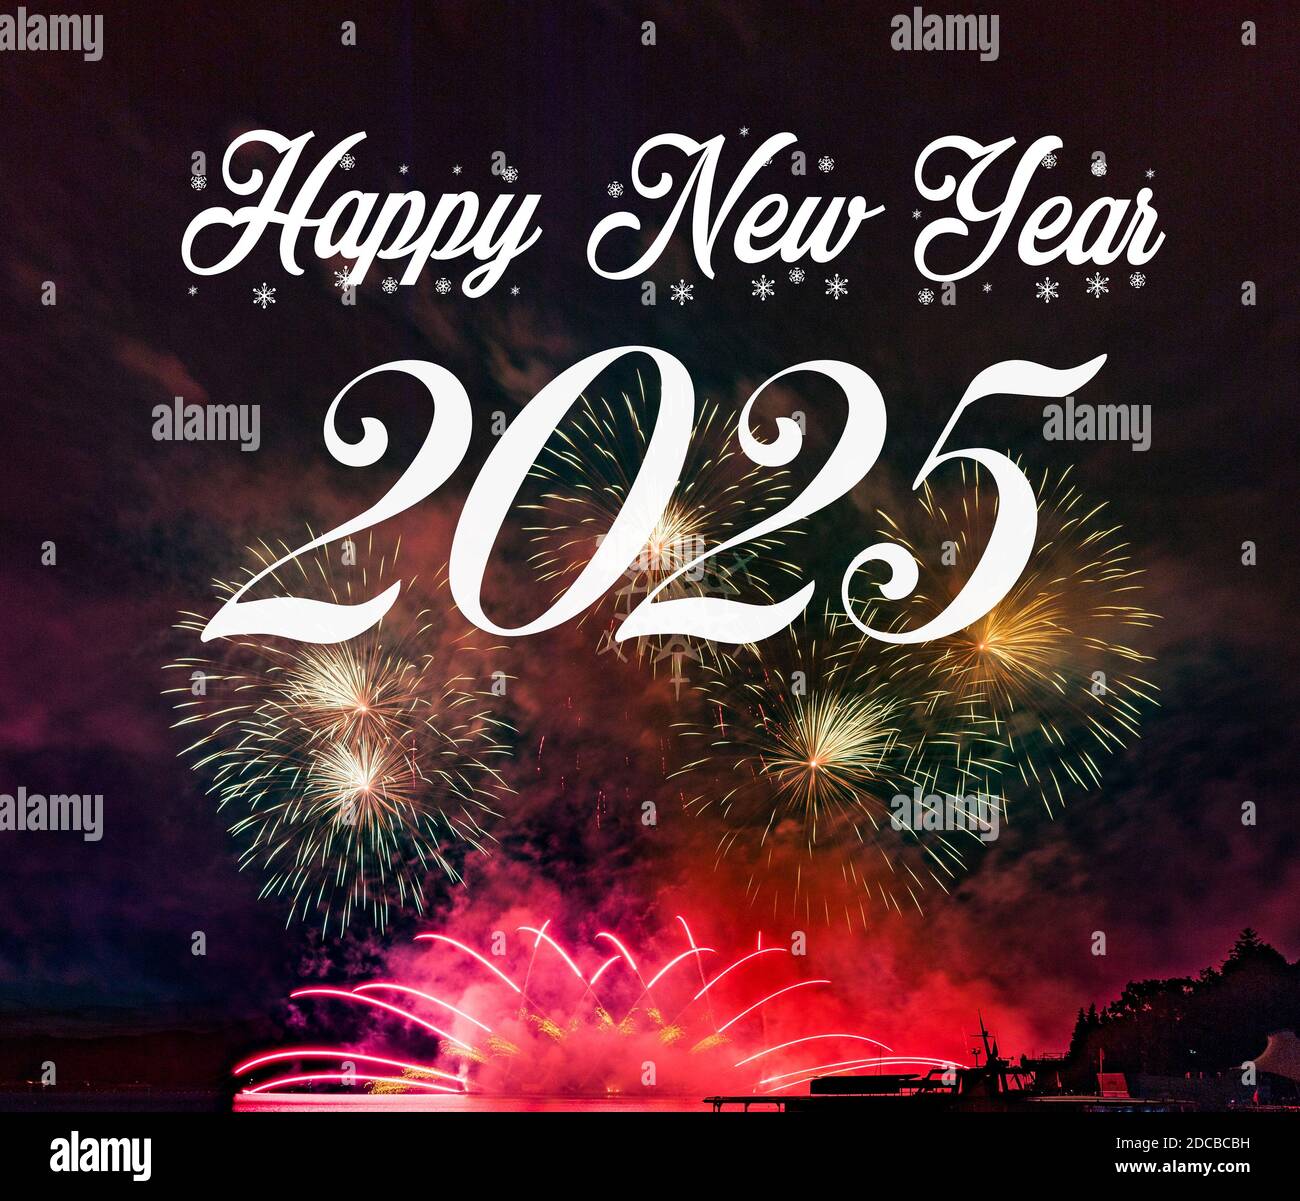 Happy new year 2025 with fireworks background. Celebration New Year 2025 Stock Photo